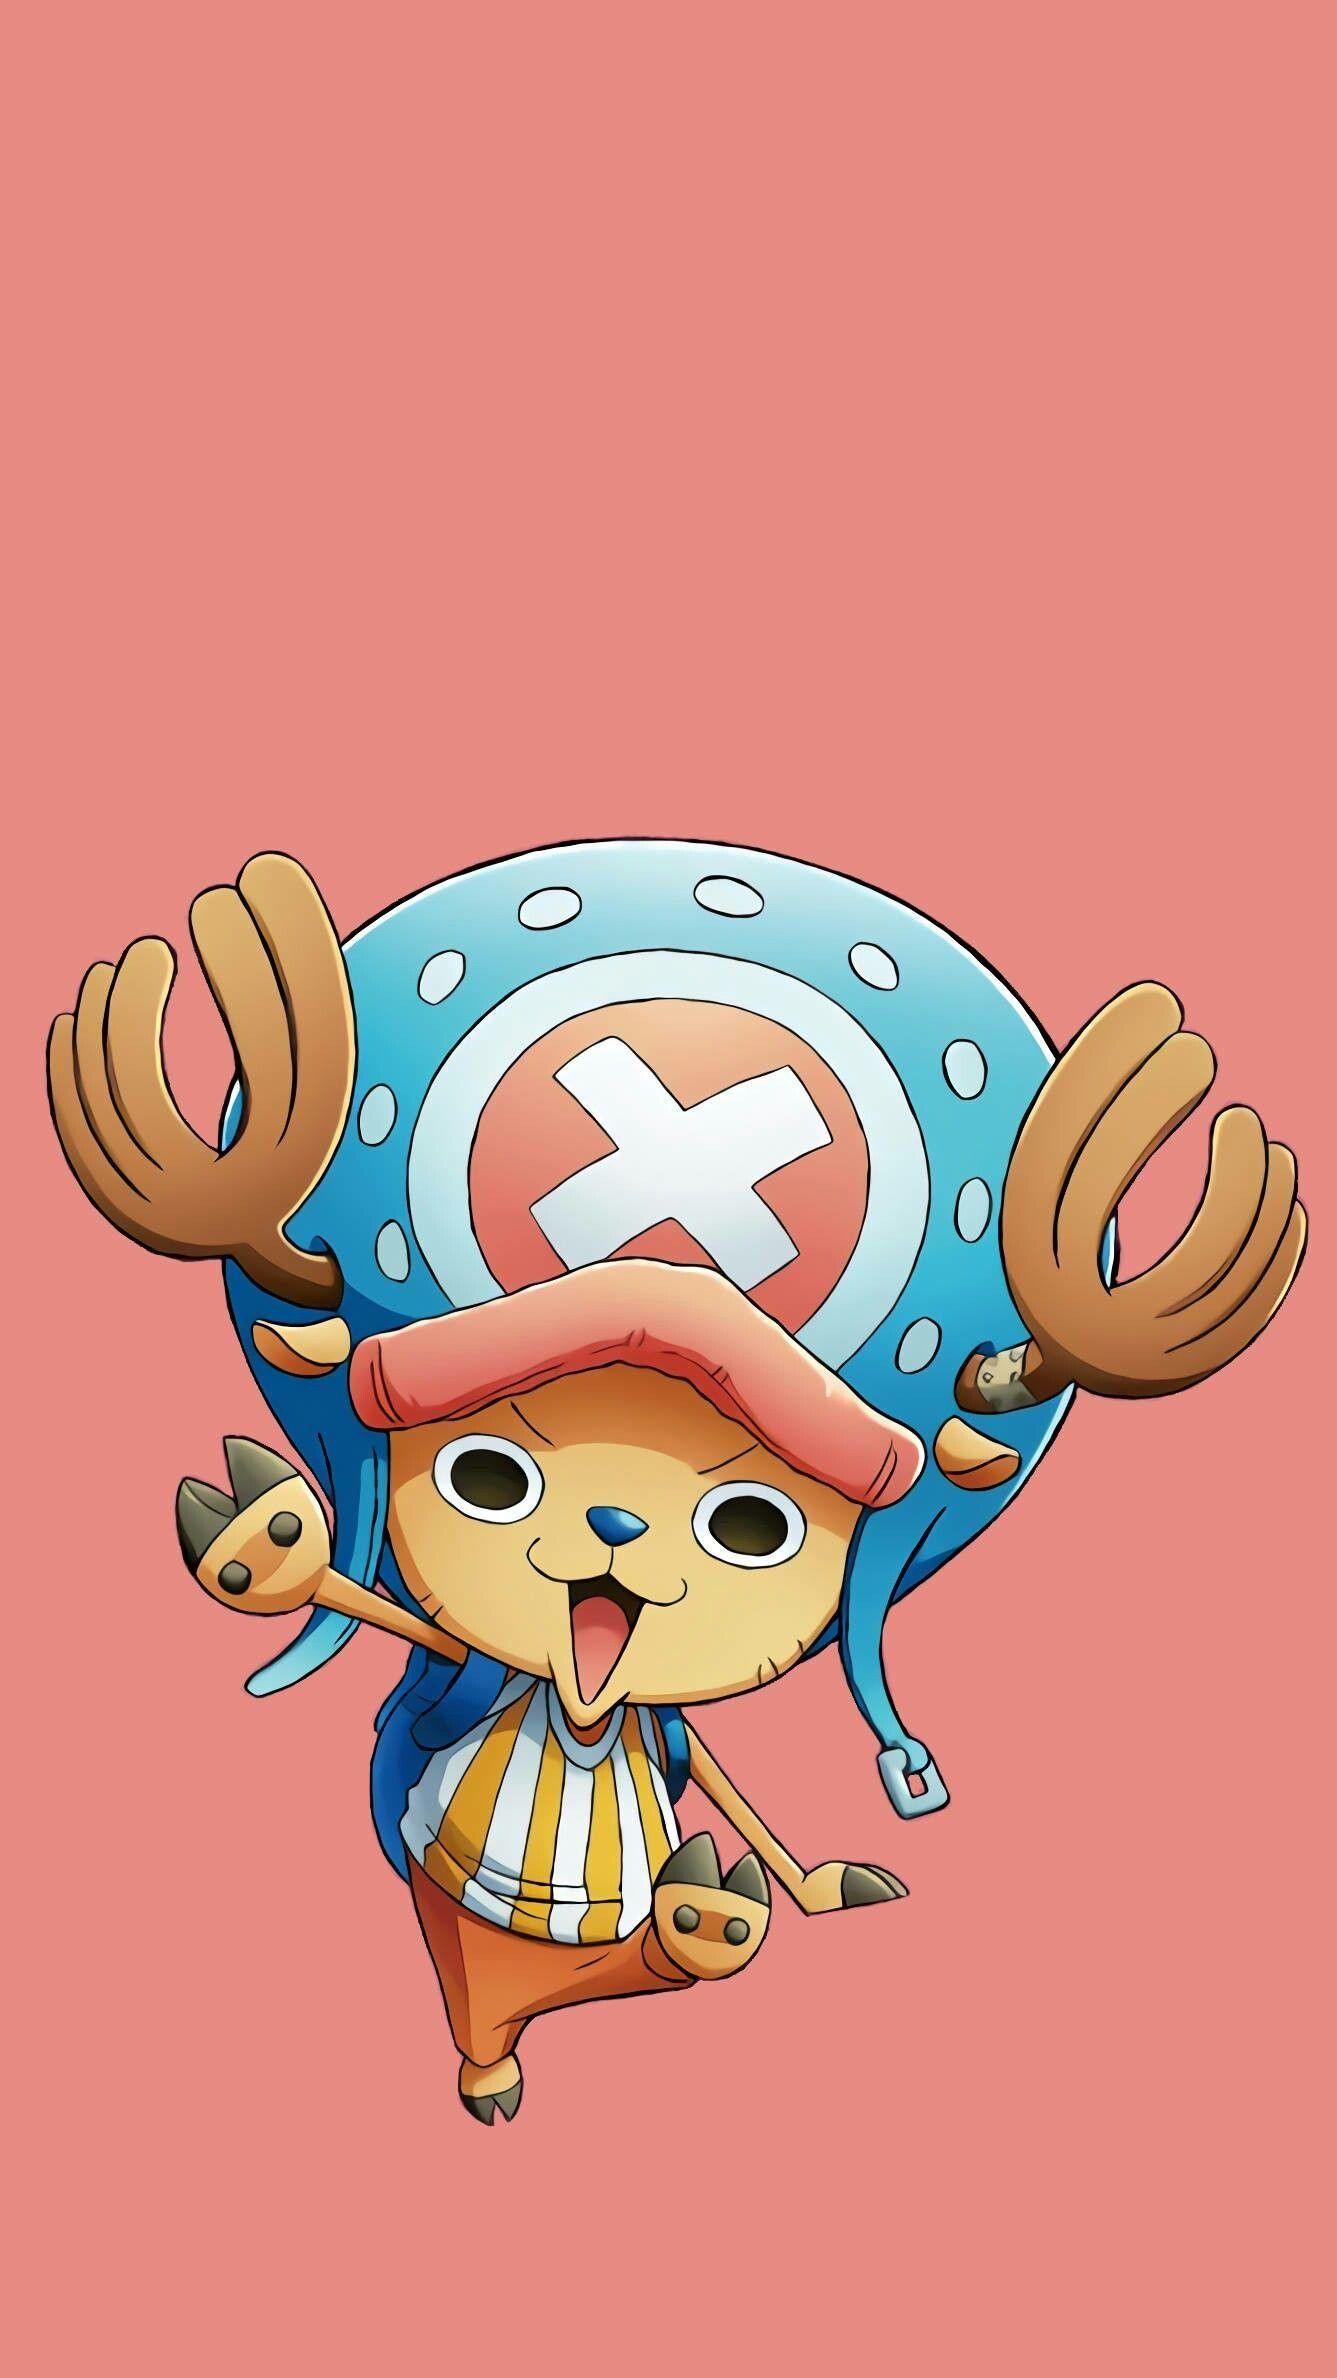 Chopper Wallpaper 4k Download, One Piece, Anime